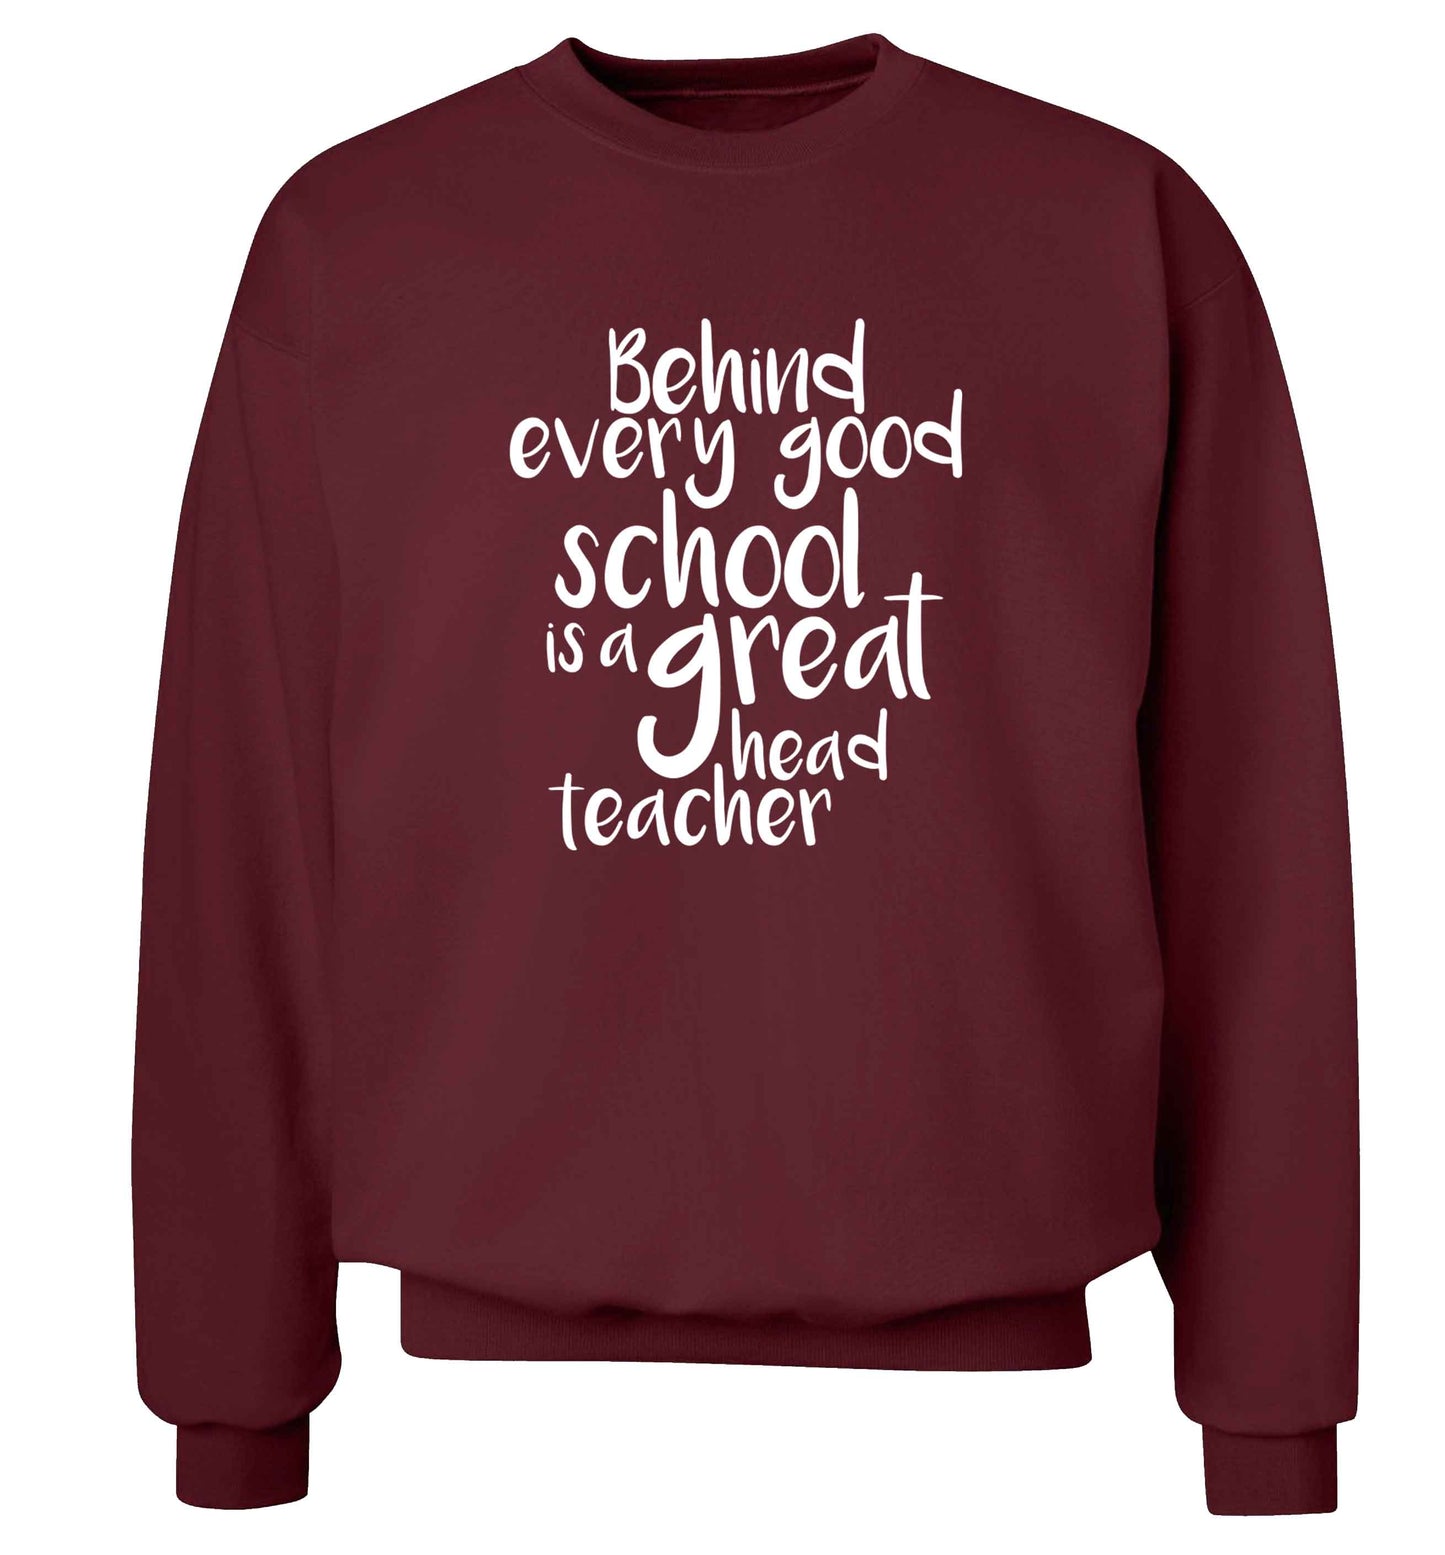 Behind every good school is a great head teacher adult's unisex maroon sweater 2XL